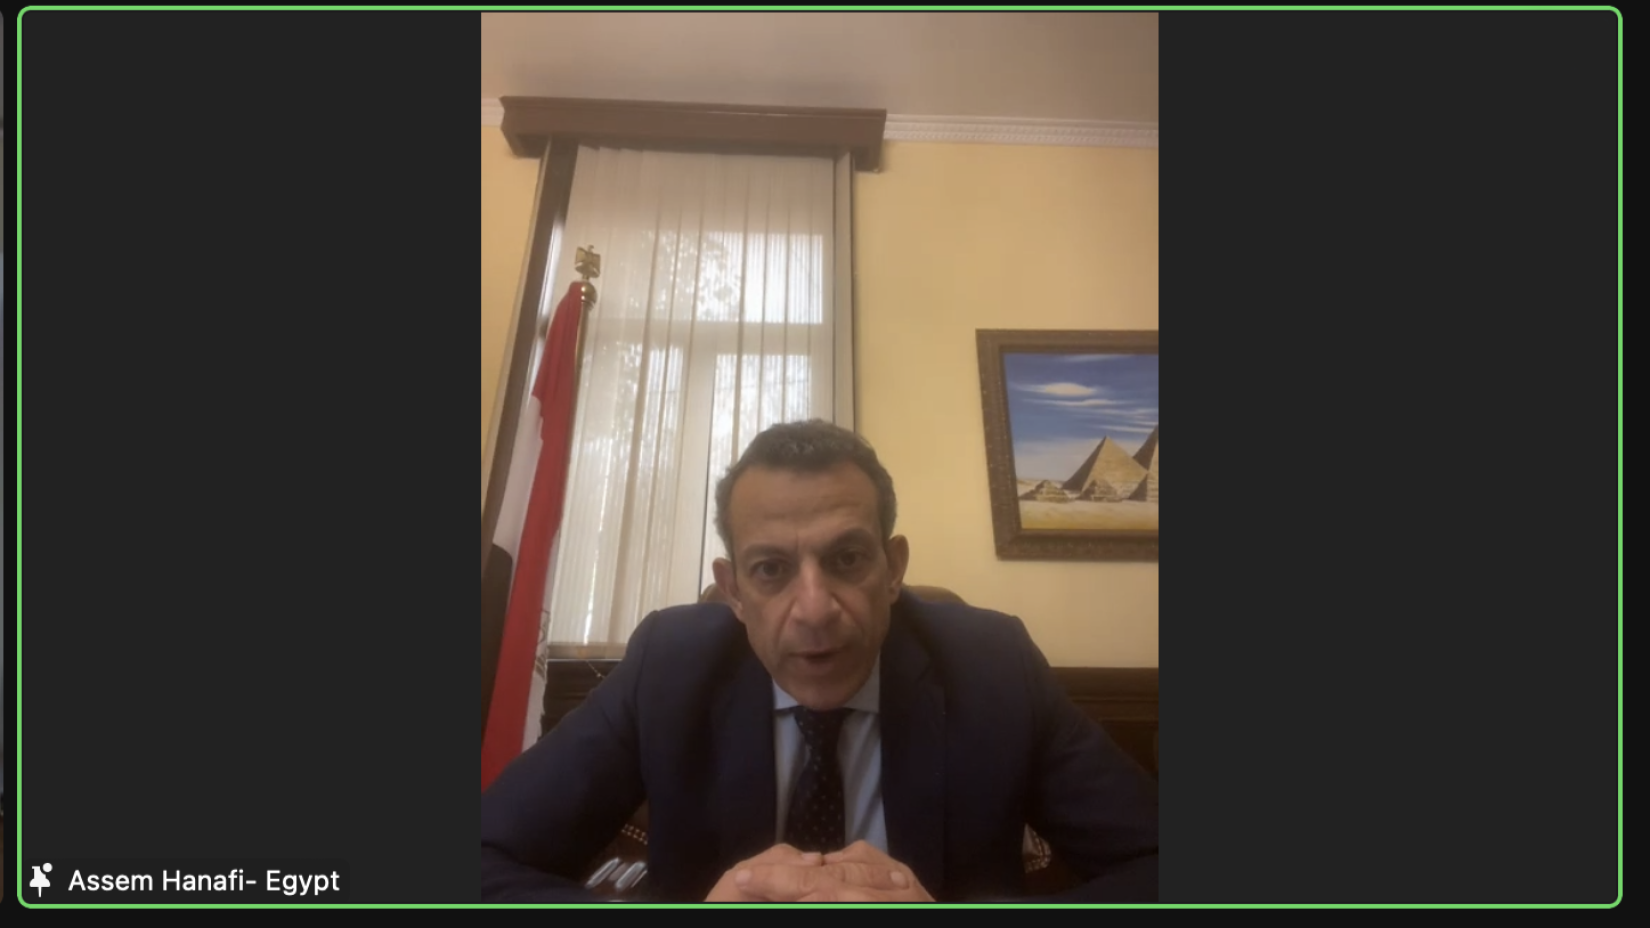 H.E. Mr. Assem Hanafi, Ambassador of the Arab Republic of Egypt to the People’s Republic of China